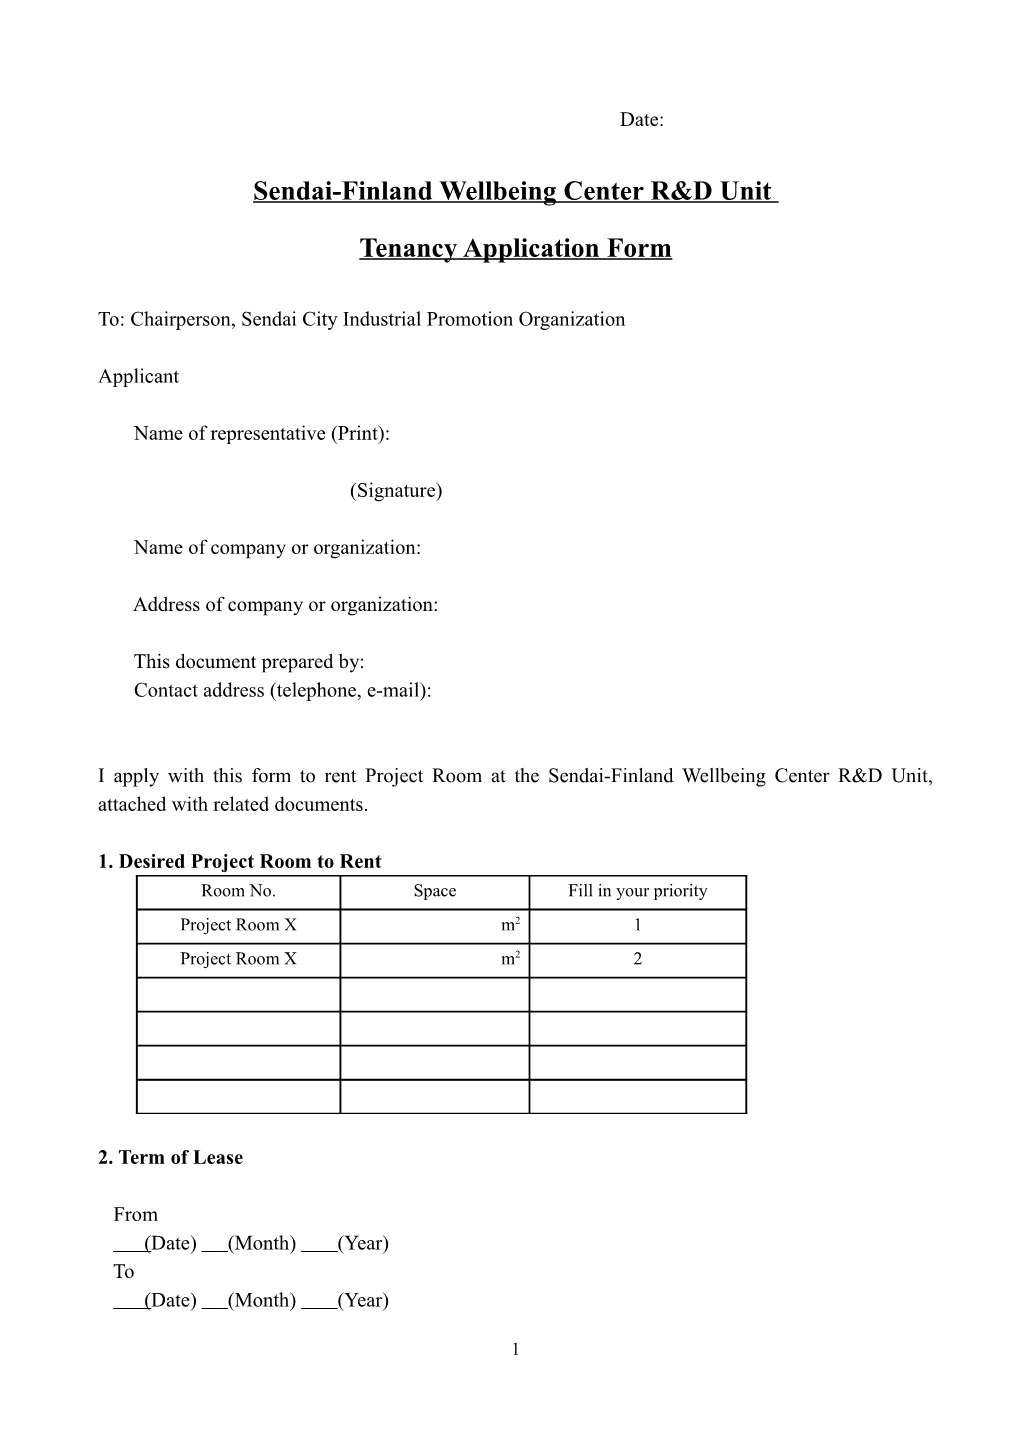 Application Form for Tenancy of R&D Unit